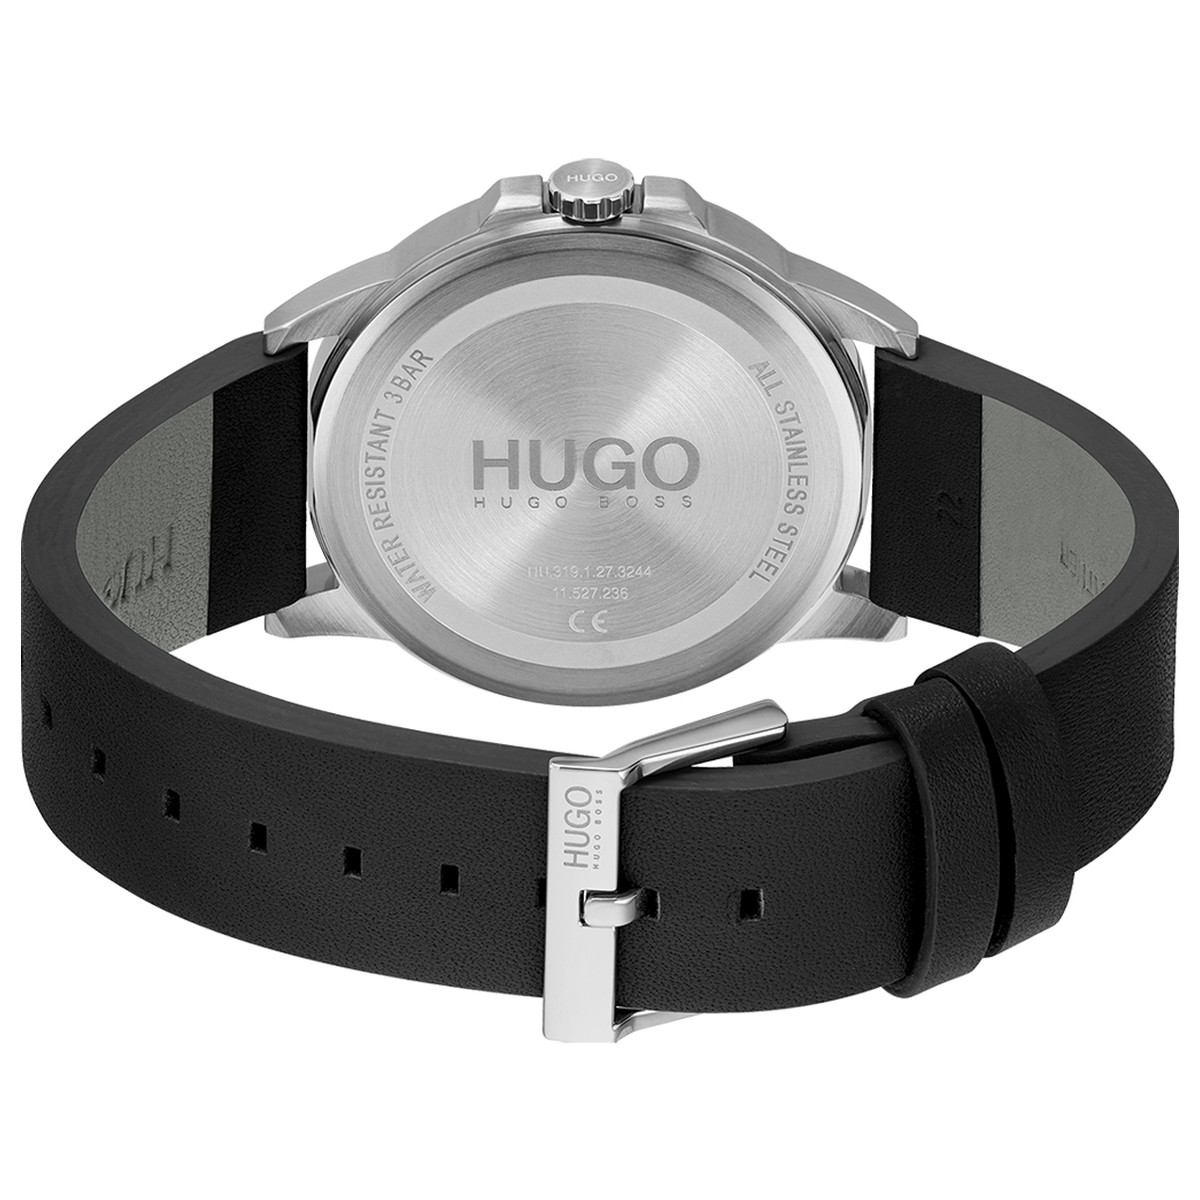 Montre HUGO First homme acier bracelet cuir noir - vue 3